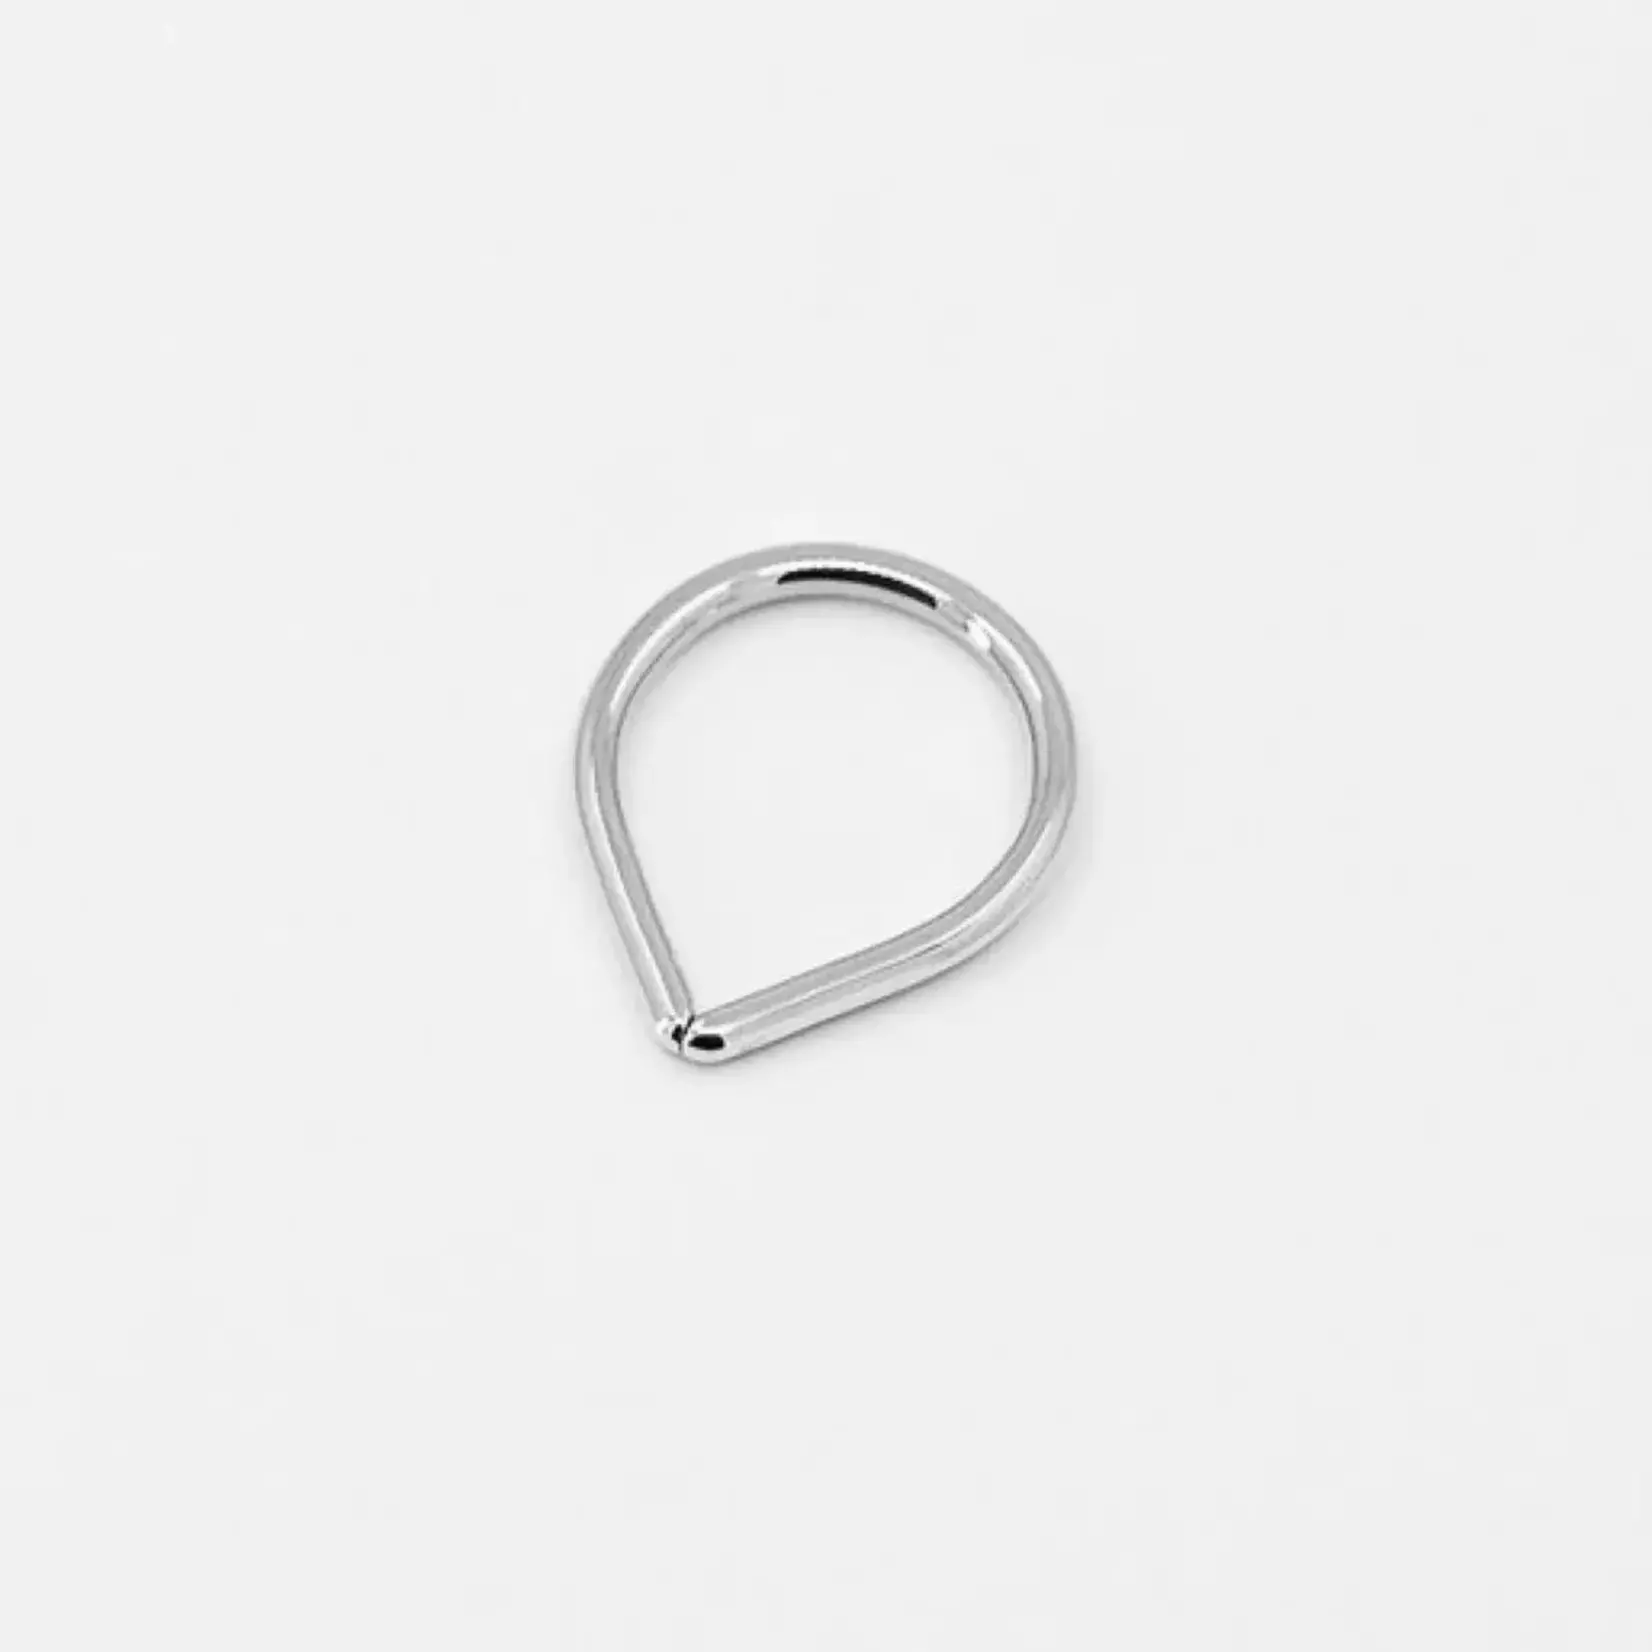 Dusk Body Jewelry Dusk 16g Pointed seam ring